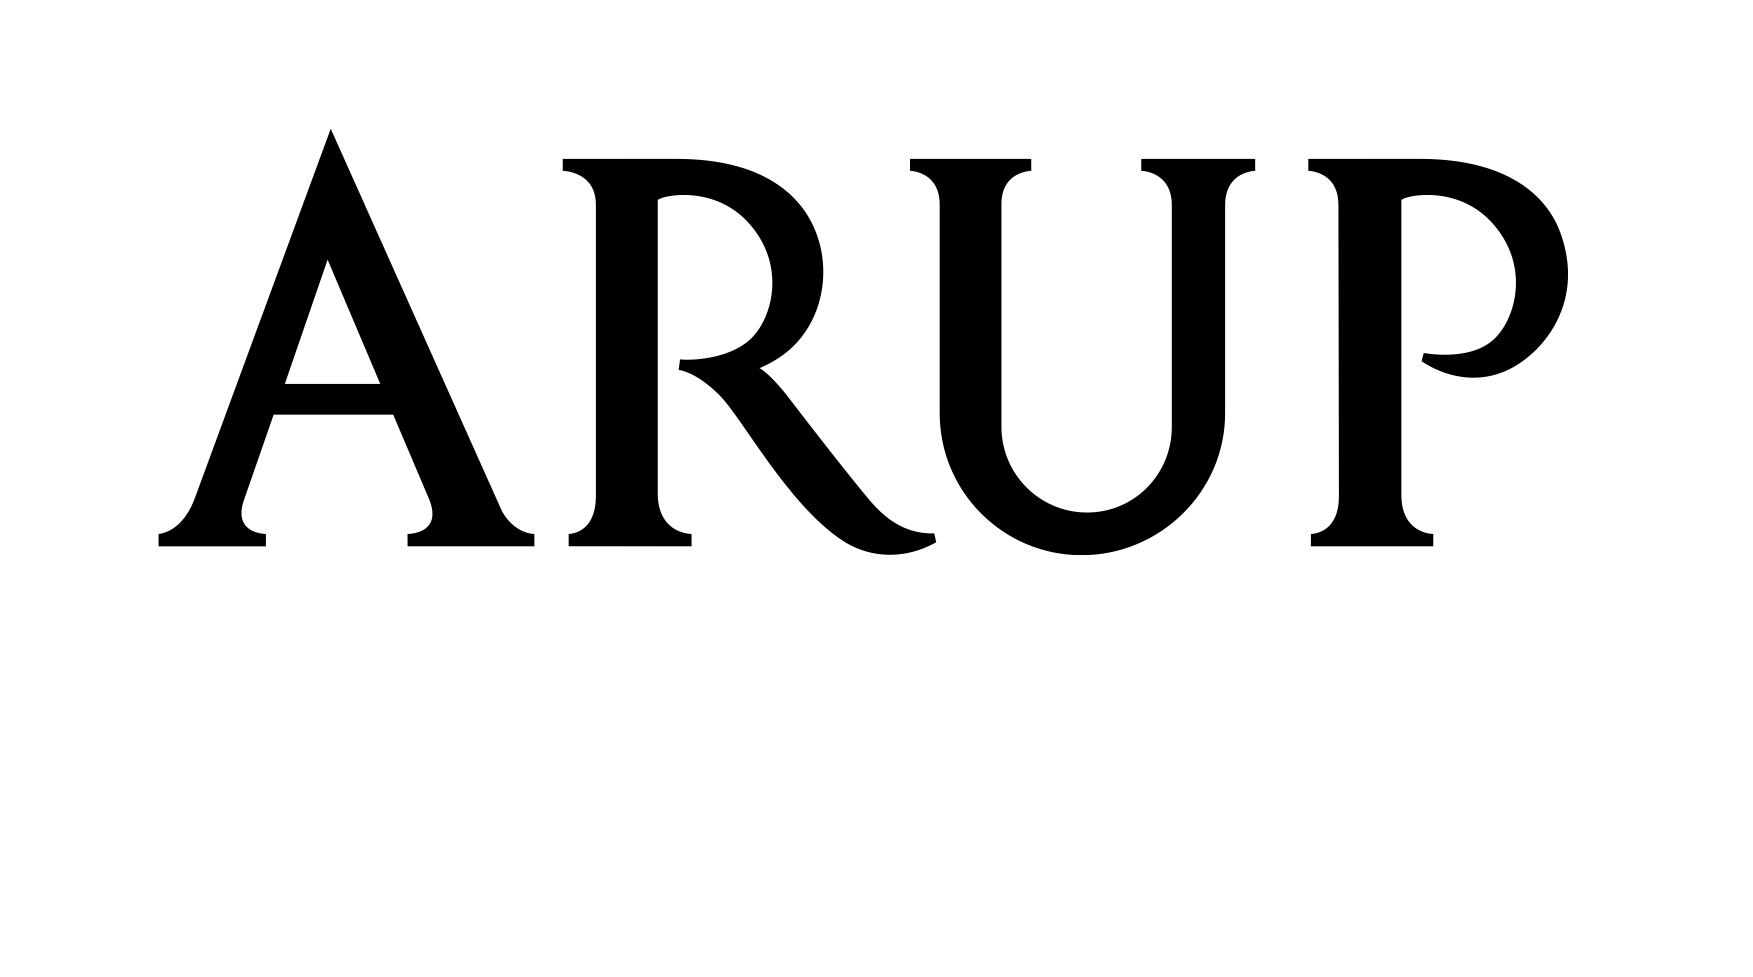 ARUP Logo